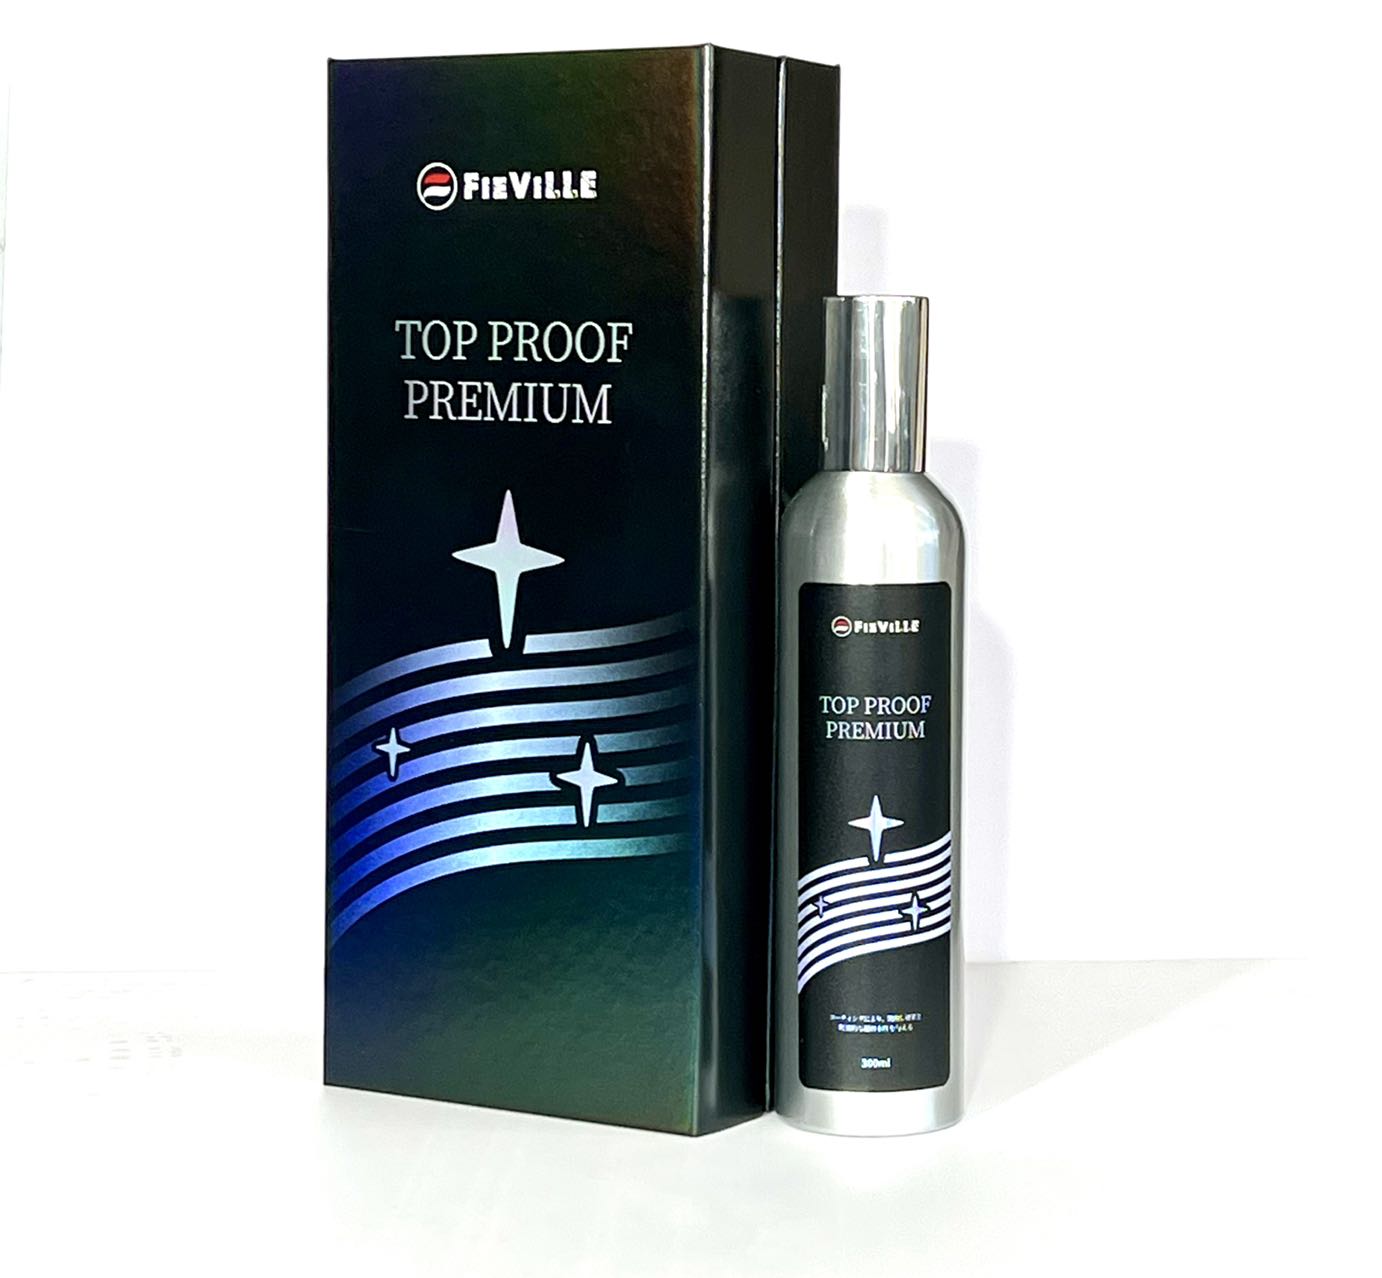 FIEVILLE フィビーレ トッププルーフプレミアム Top Proof Premium FIEVILLE